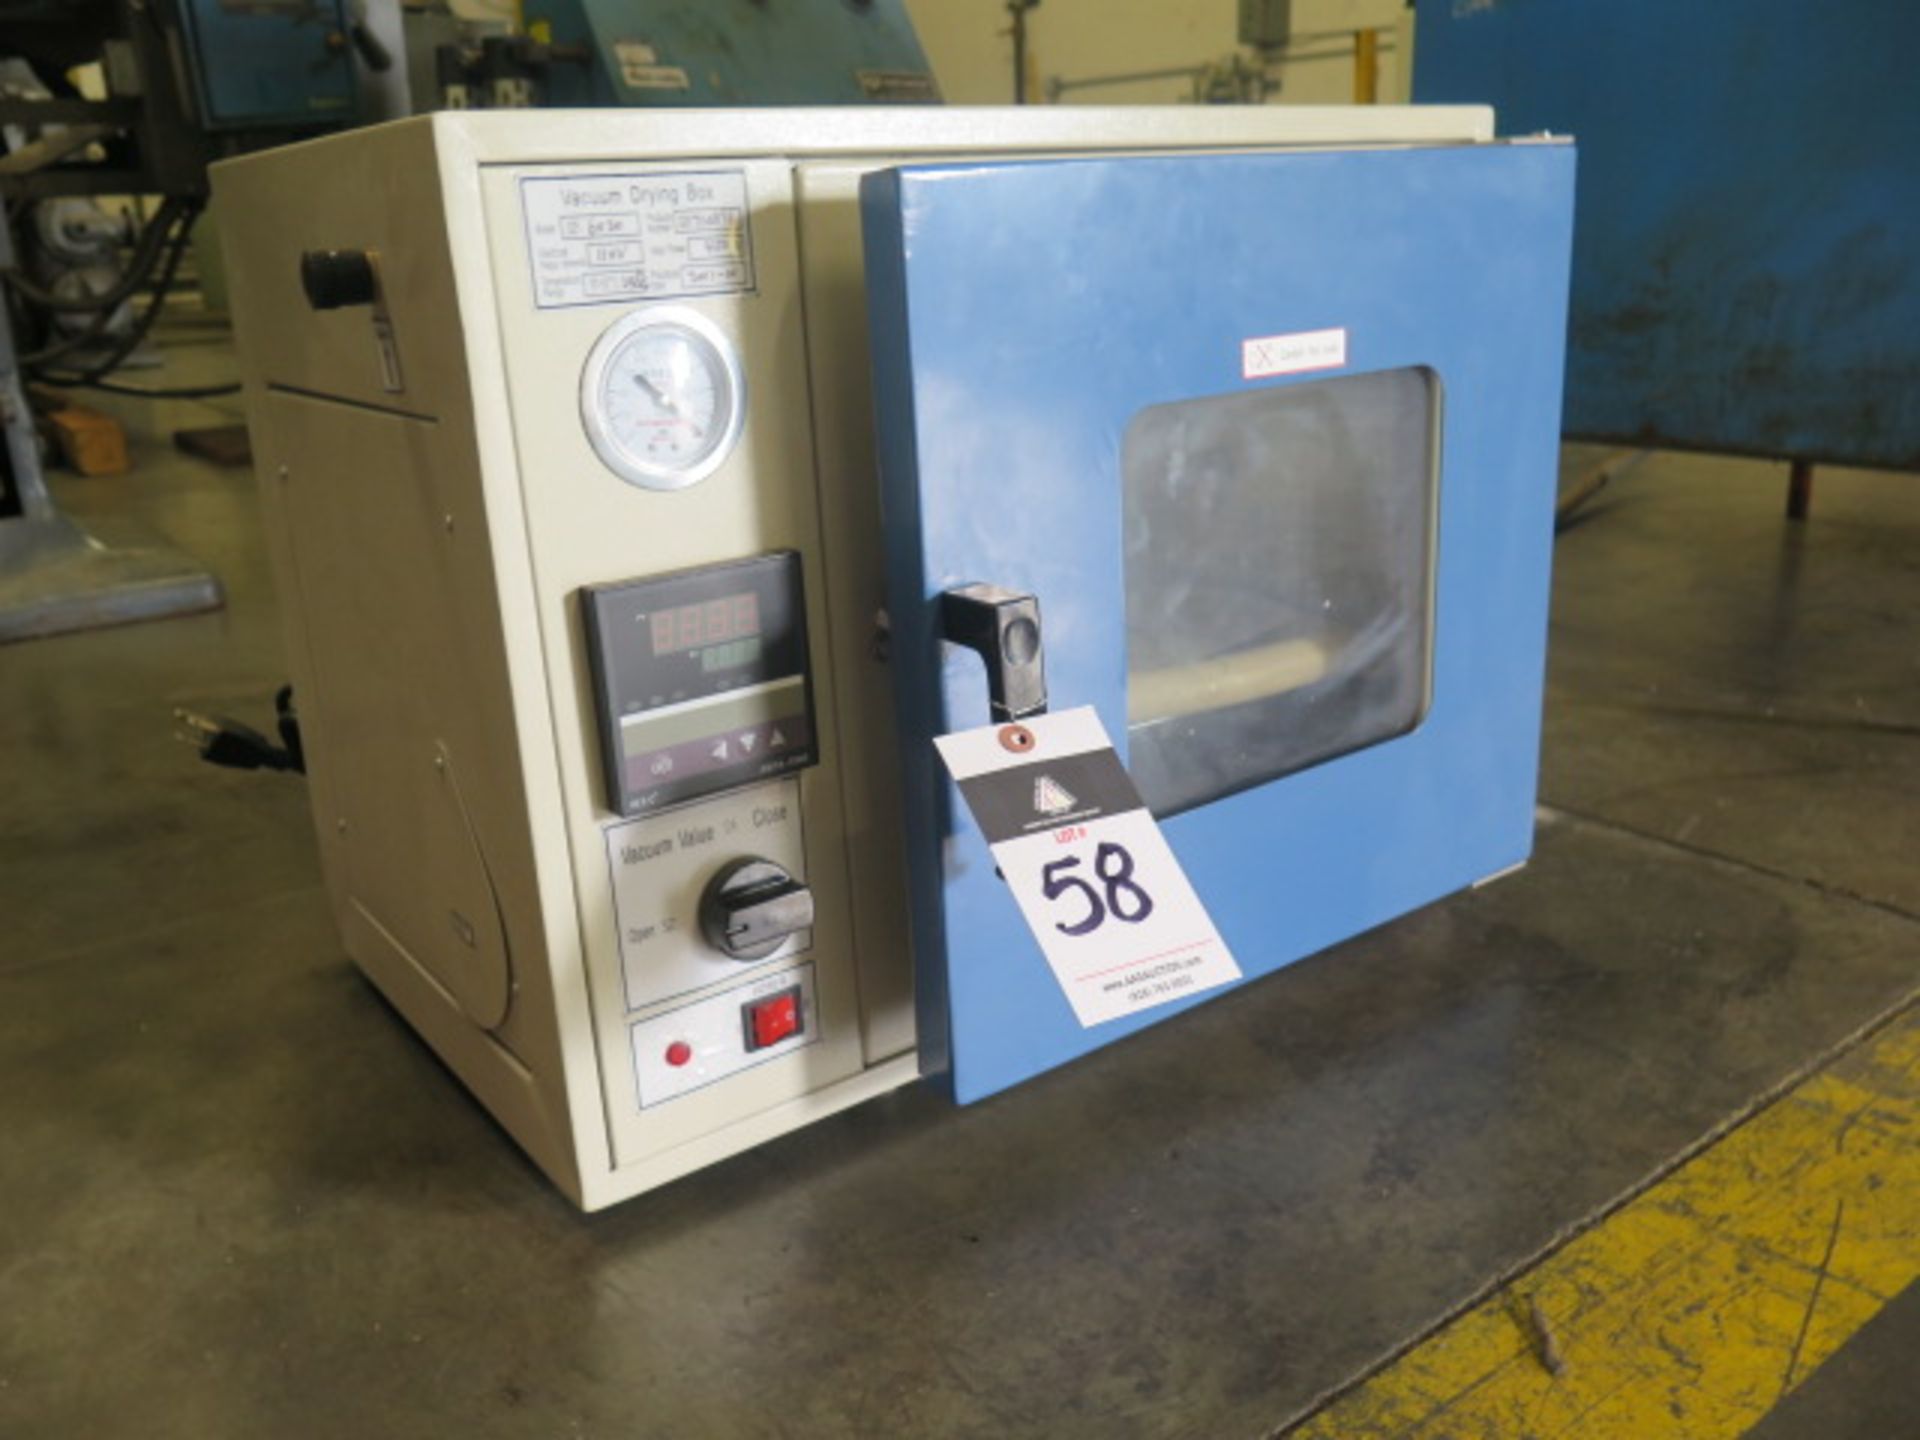 2017 Import mdl. DZF-6020 450 Watt Vacuum Drying Oven w/ 10-250 Deg C, 110 Volt - Image 2 of 5